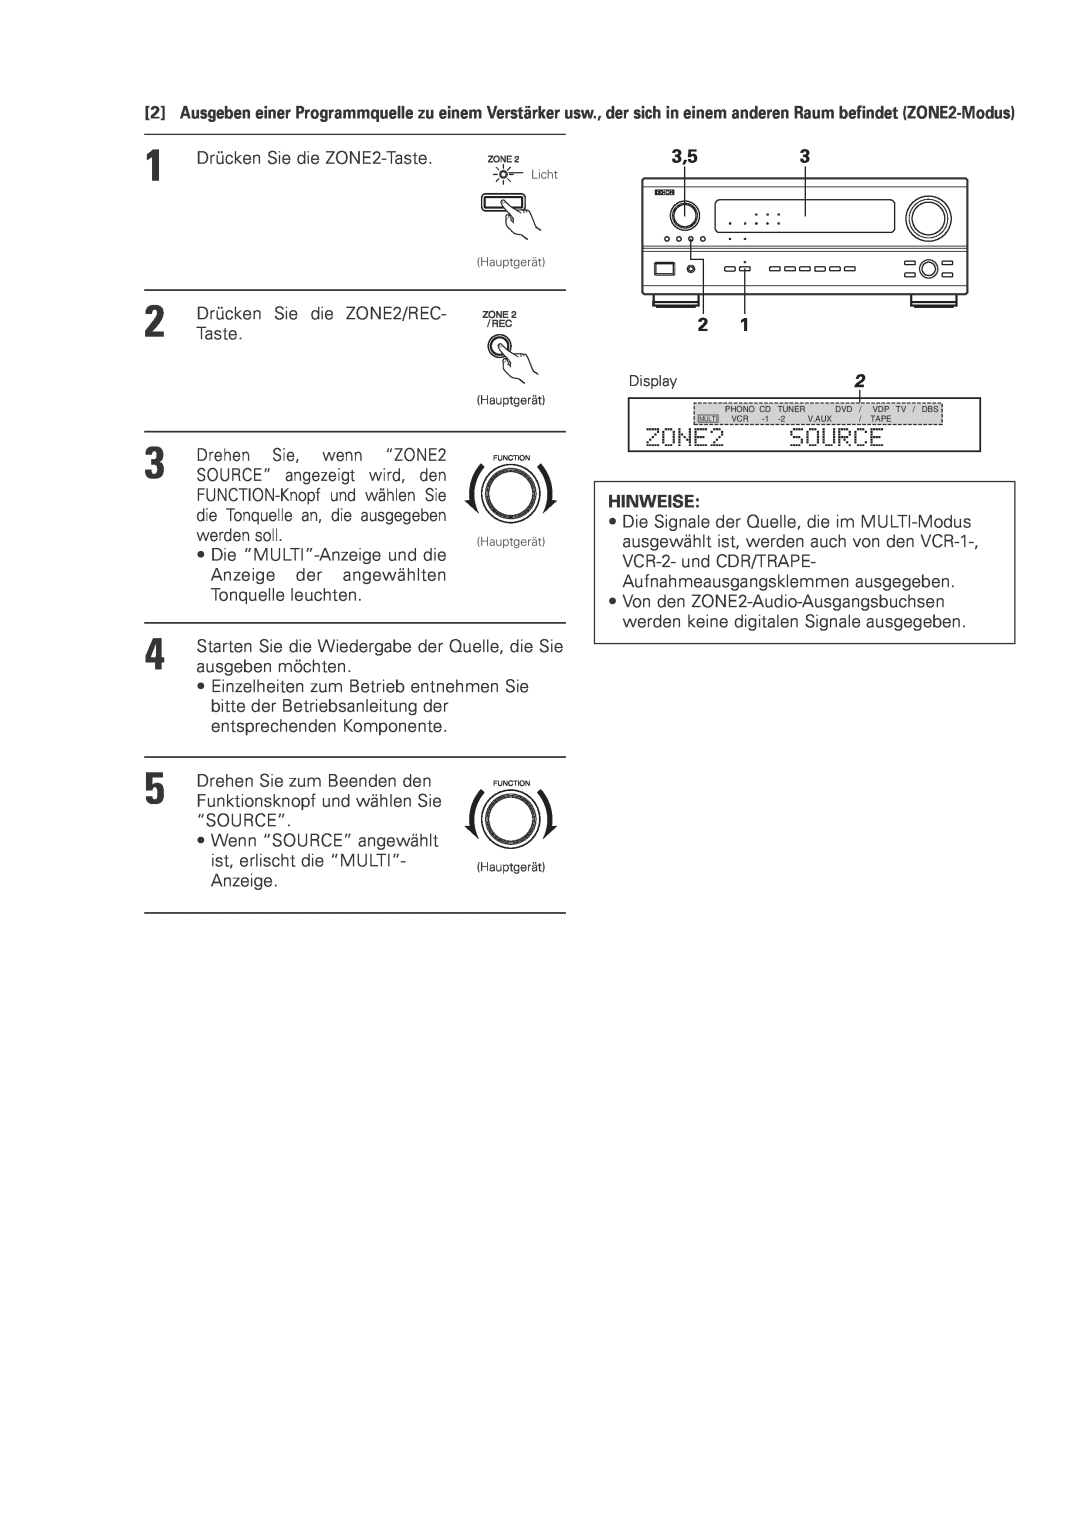 Denon AVR-2803 manual ZONE2, Source, Hinweise 